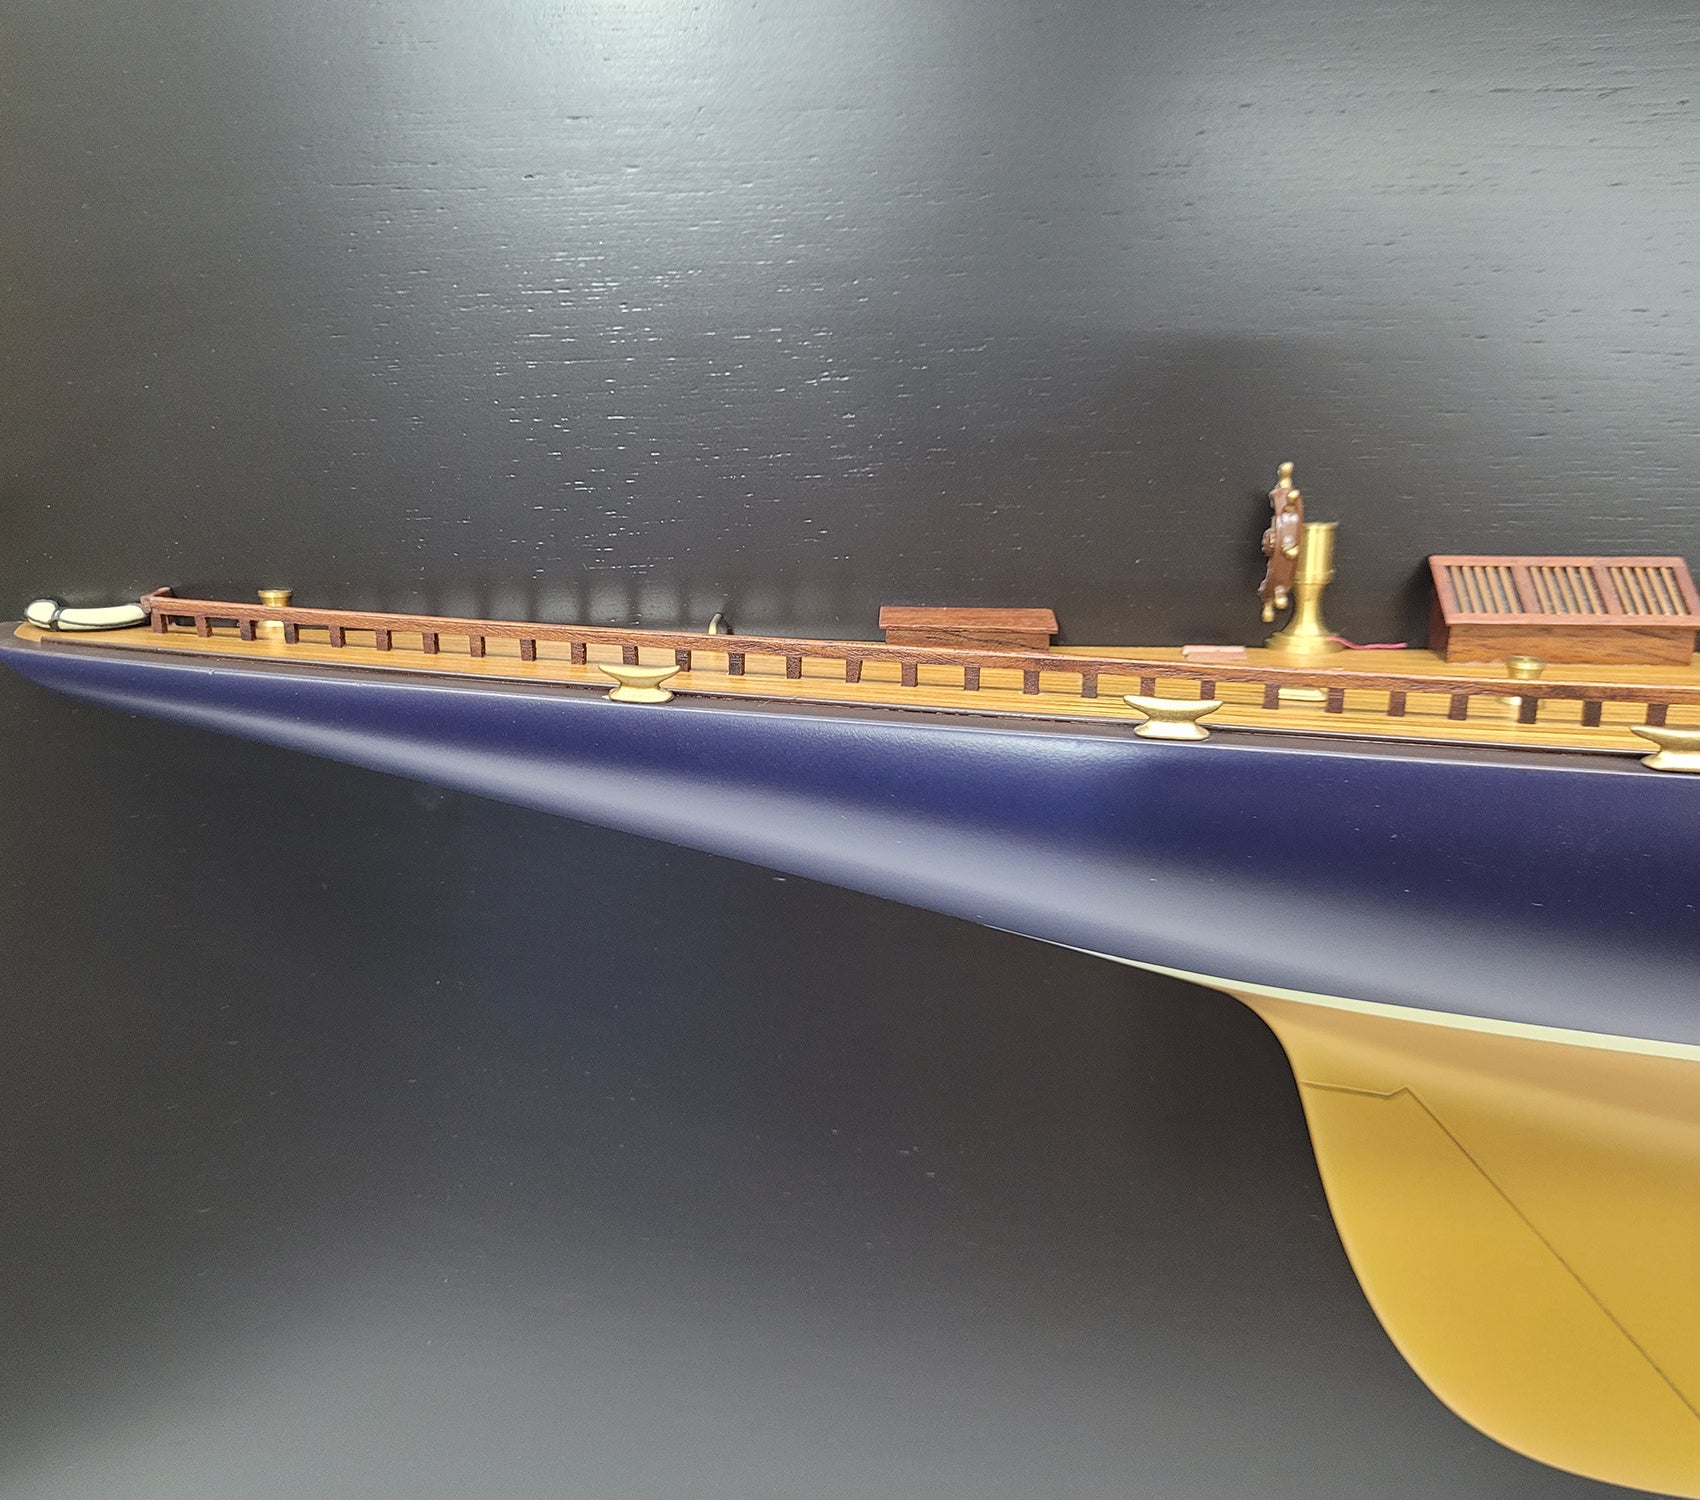 4- Foot Half Model of the J Class Yacht Endeavor - Gold - Lannan Gallery